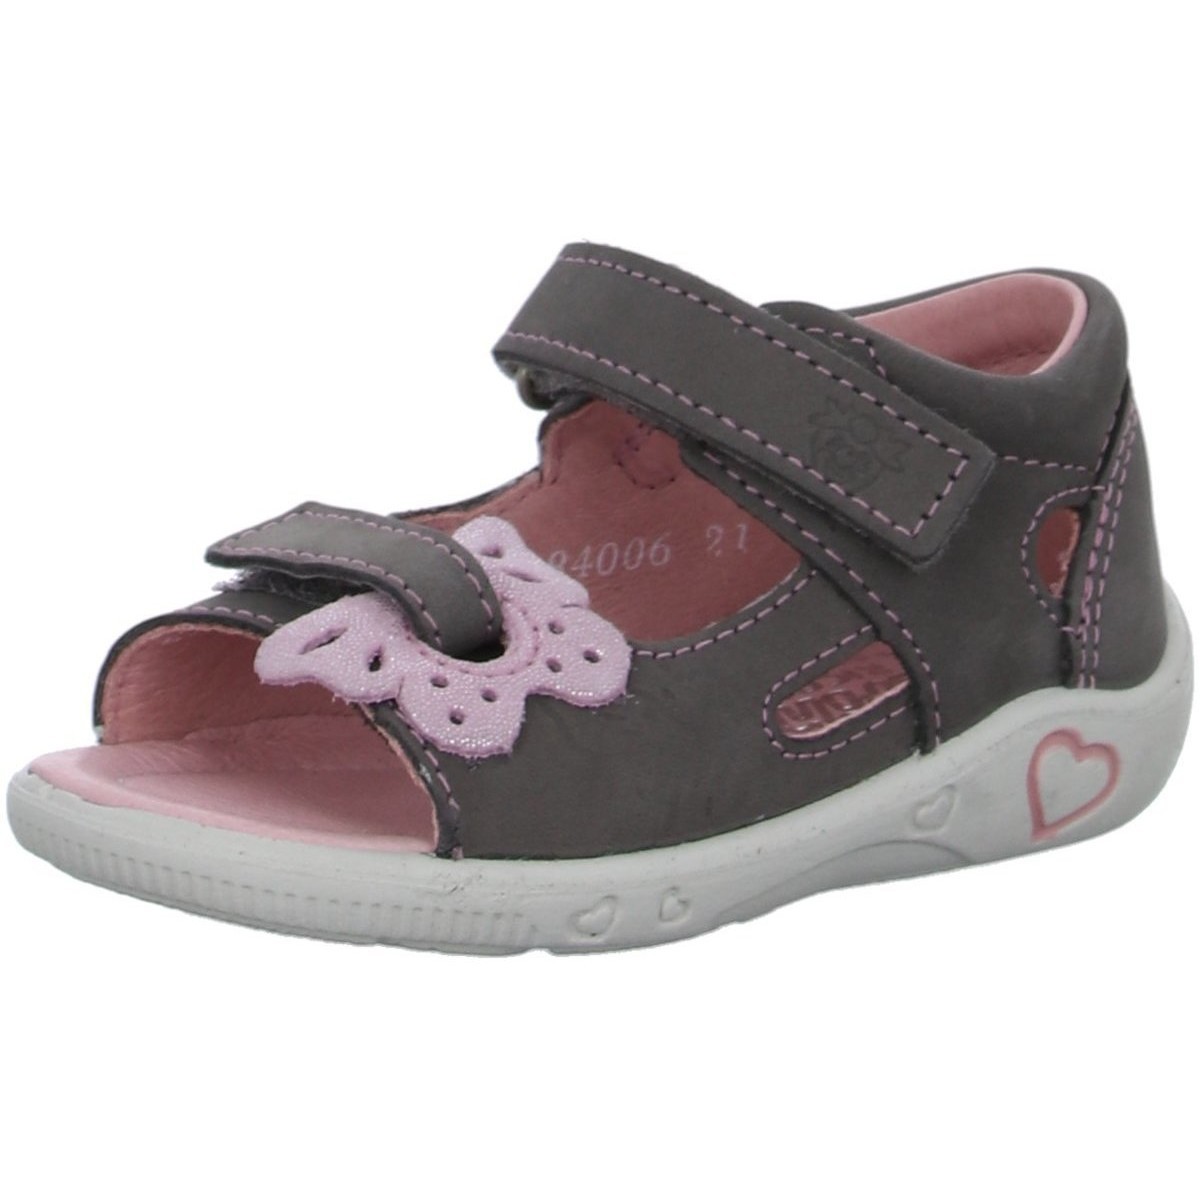 Schuhe Mädchen Babyschuhe Pepino By Ricosta Maedchen SILVI 502200102/450 Grau